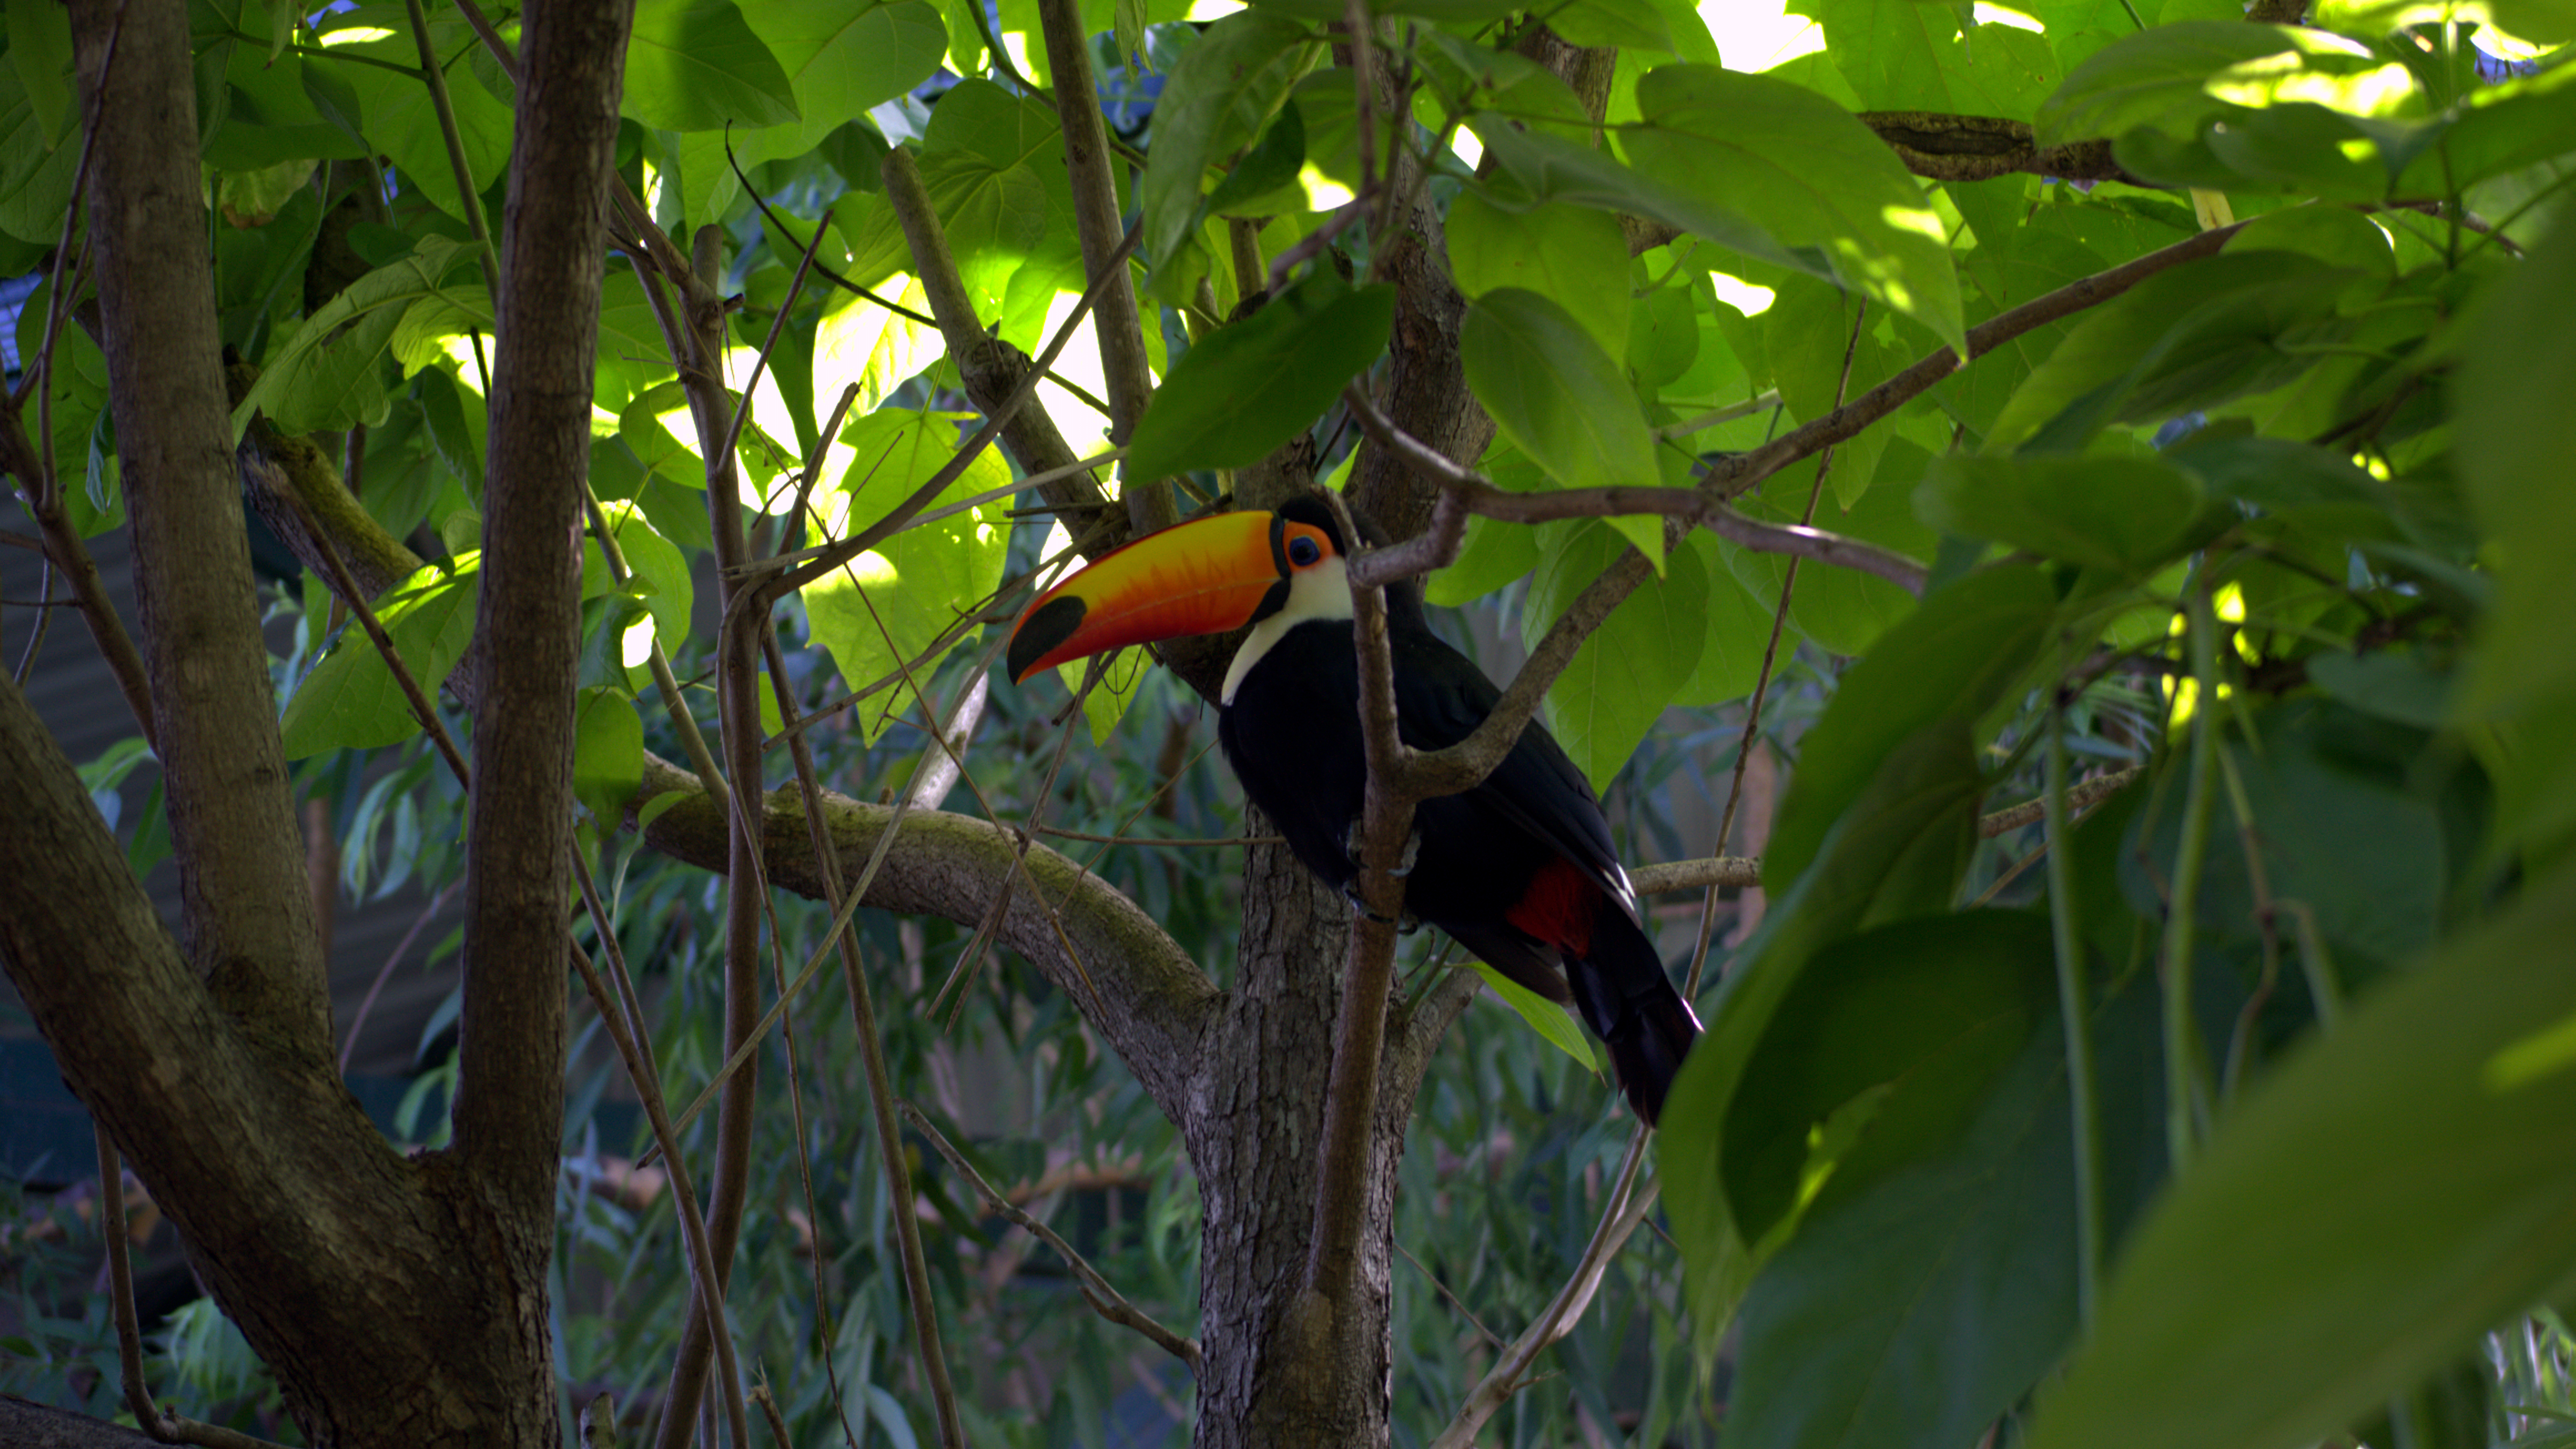 Nice toucan